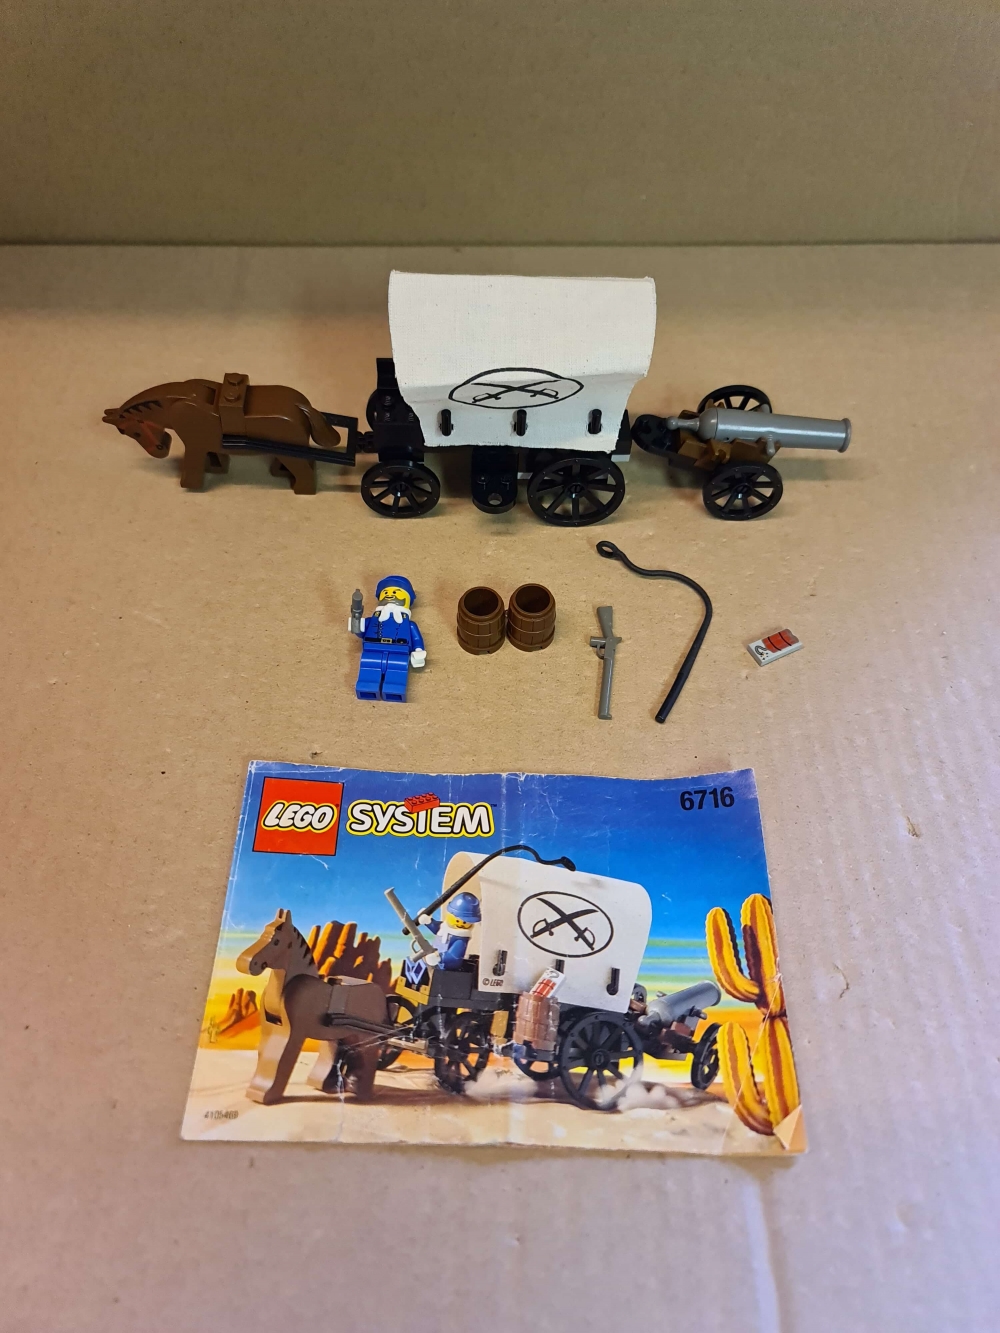 Sett 6716 fra Lego Western : Cowboys serien
Pent sett. Komplett med manual